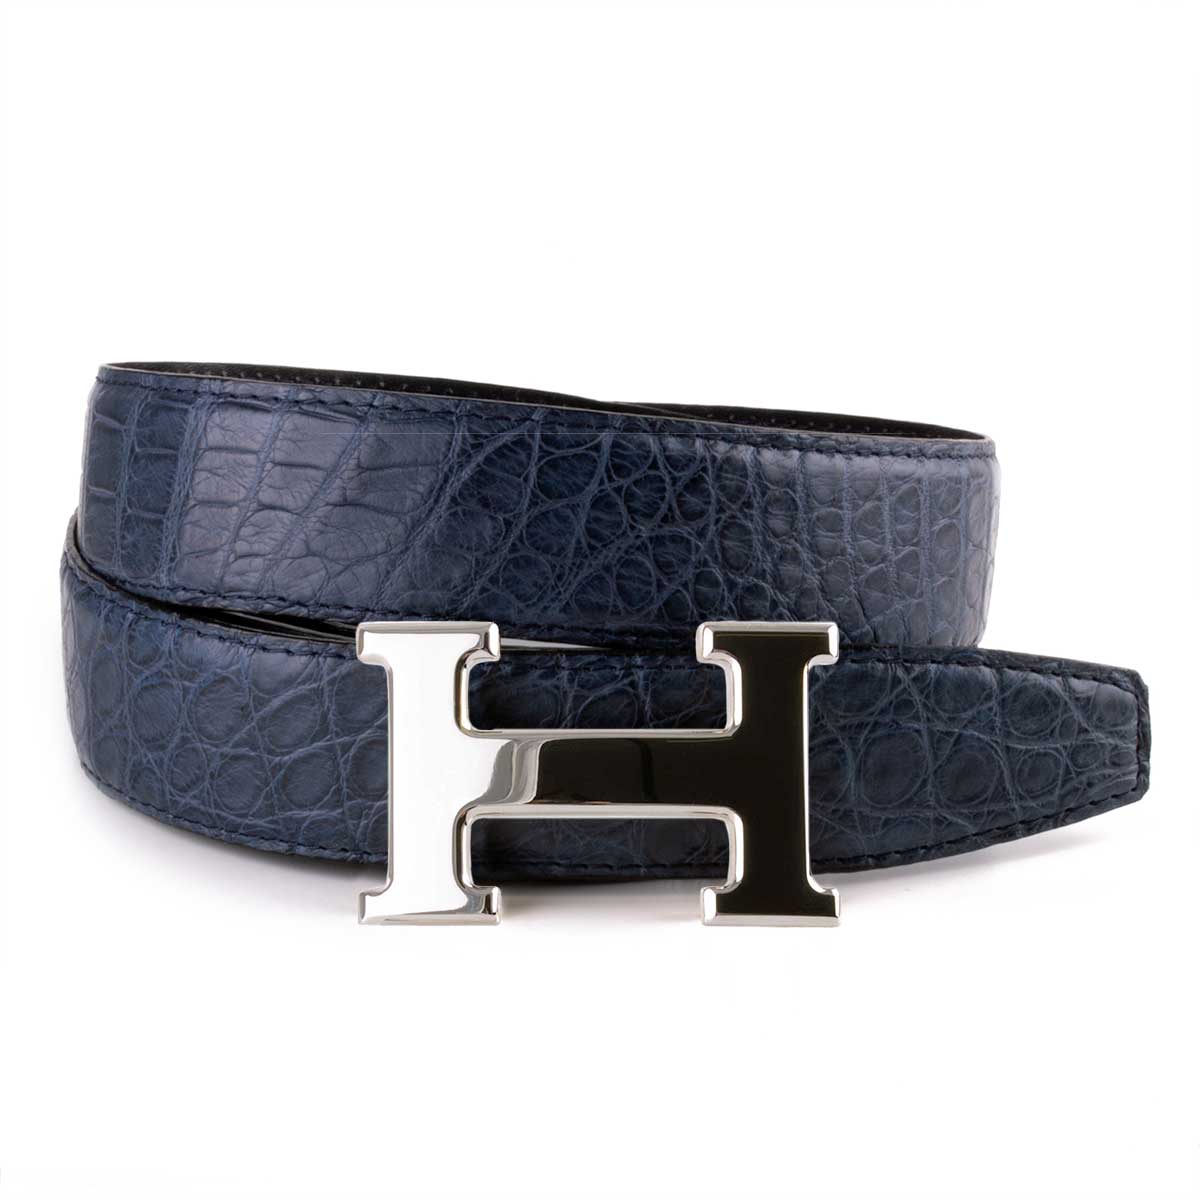 Classic leather belt with polished steel "H" buckle - Alligator (black, navy blue, blue)